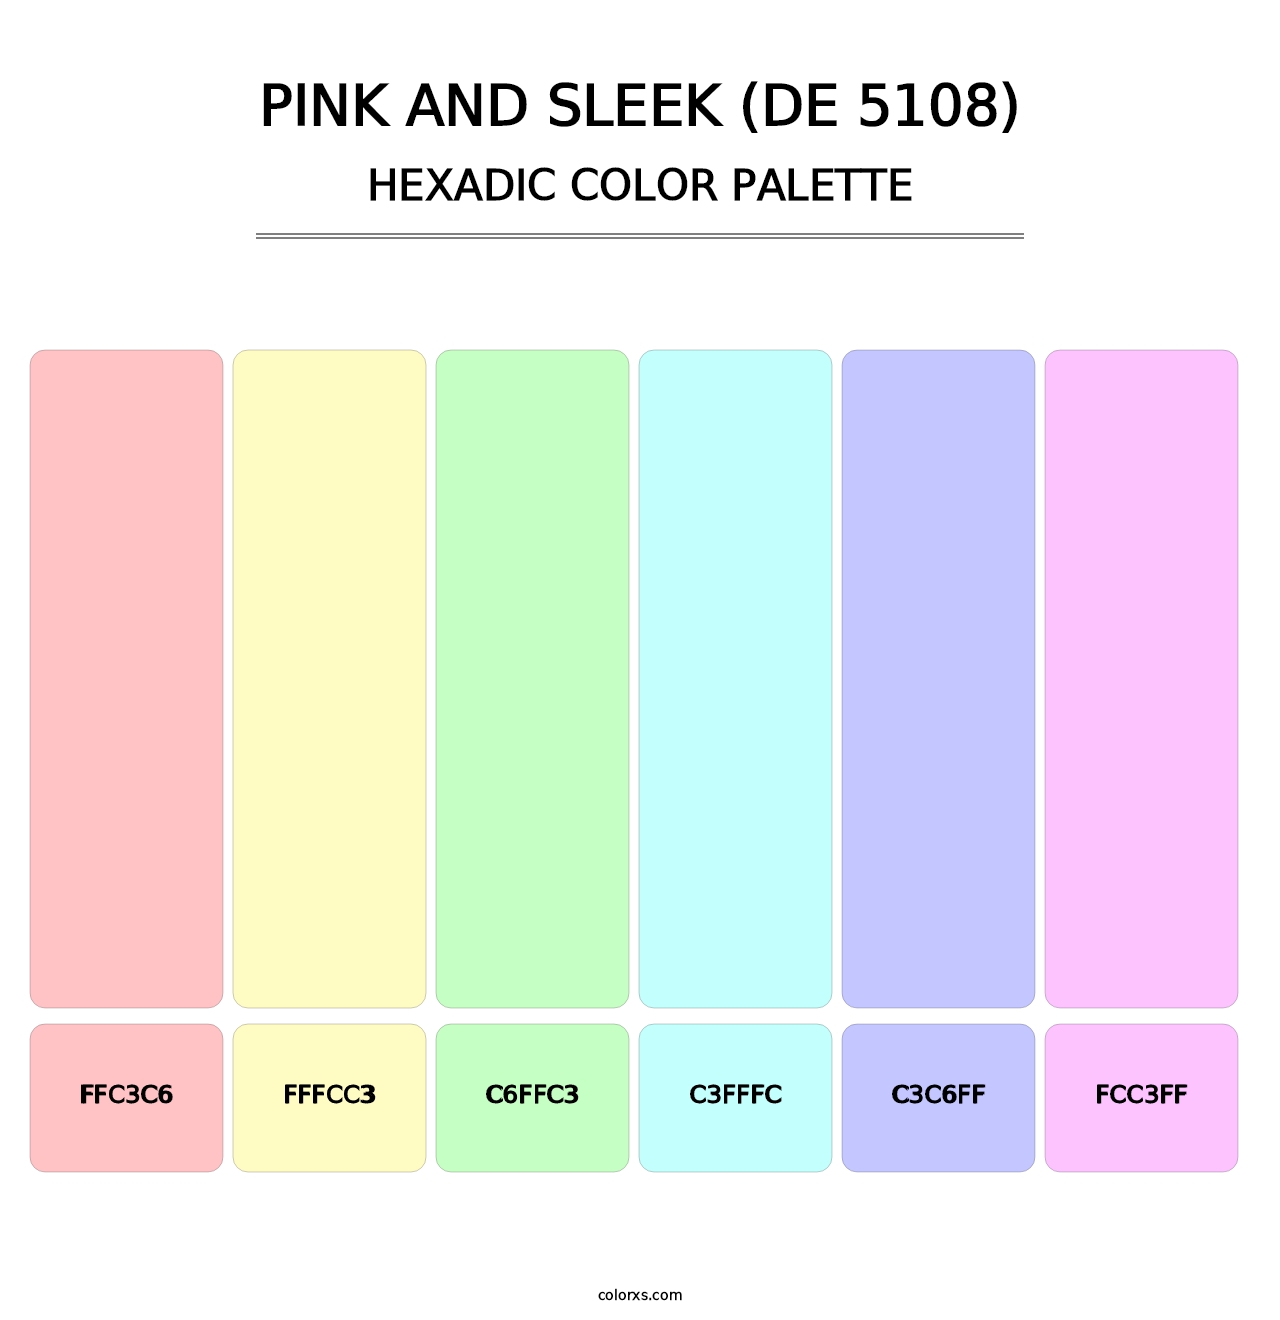 Pink and Sleek (DE 5108) - Hexadic Color Palette